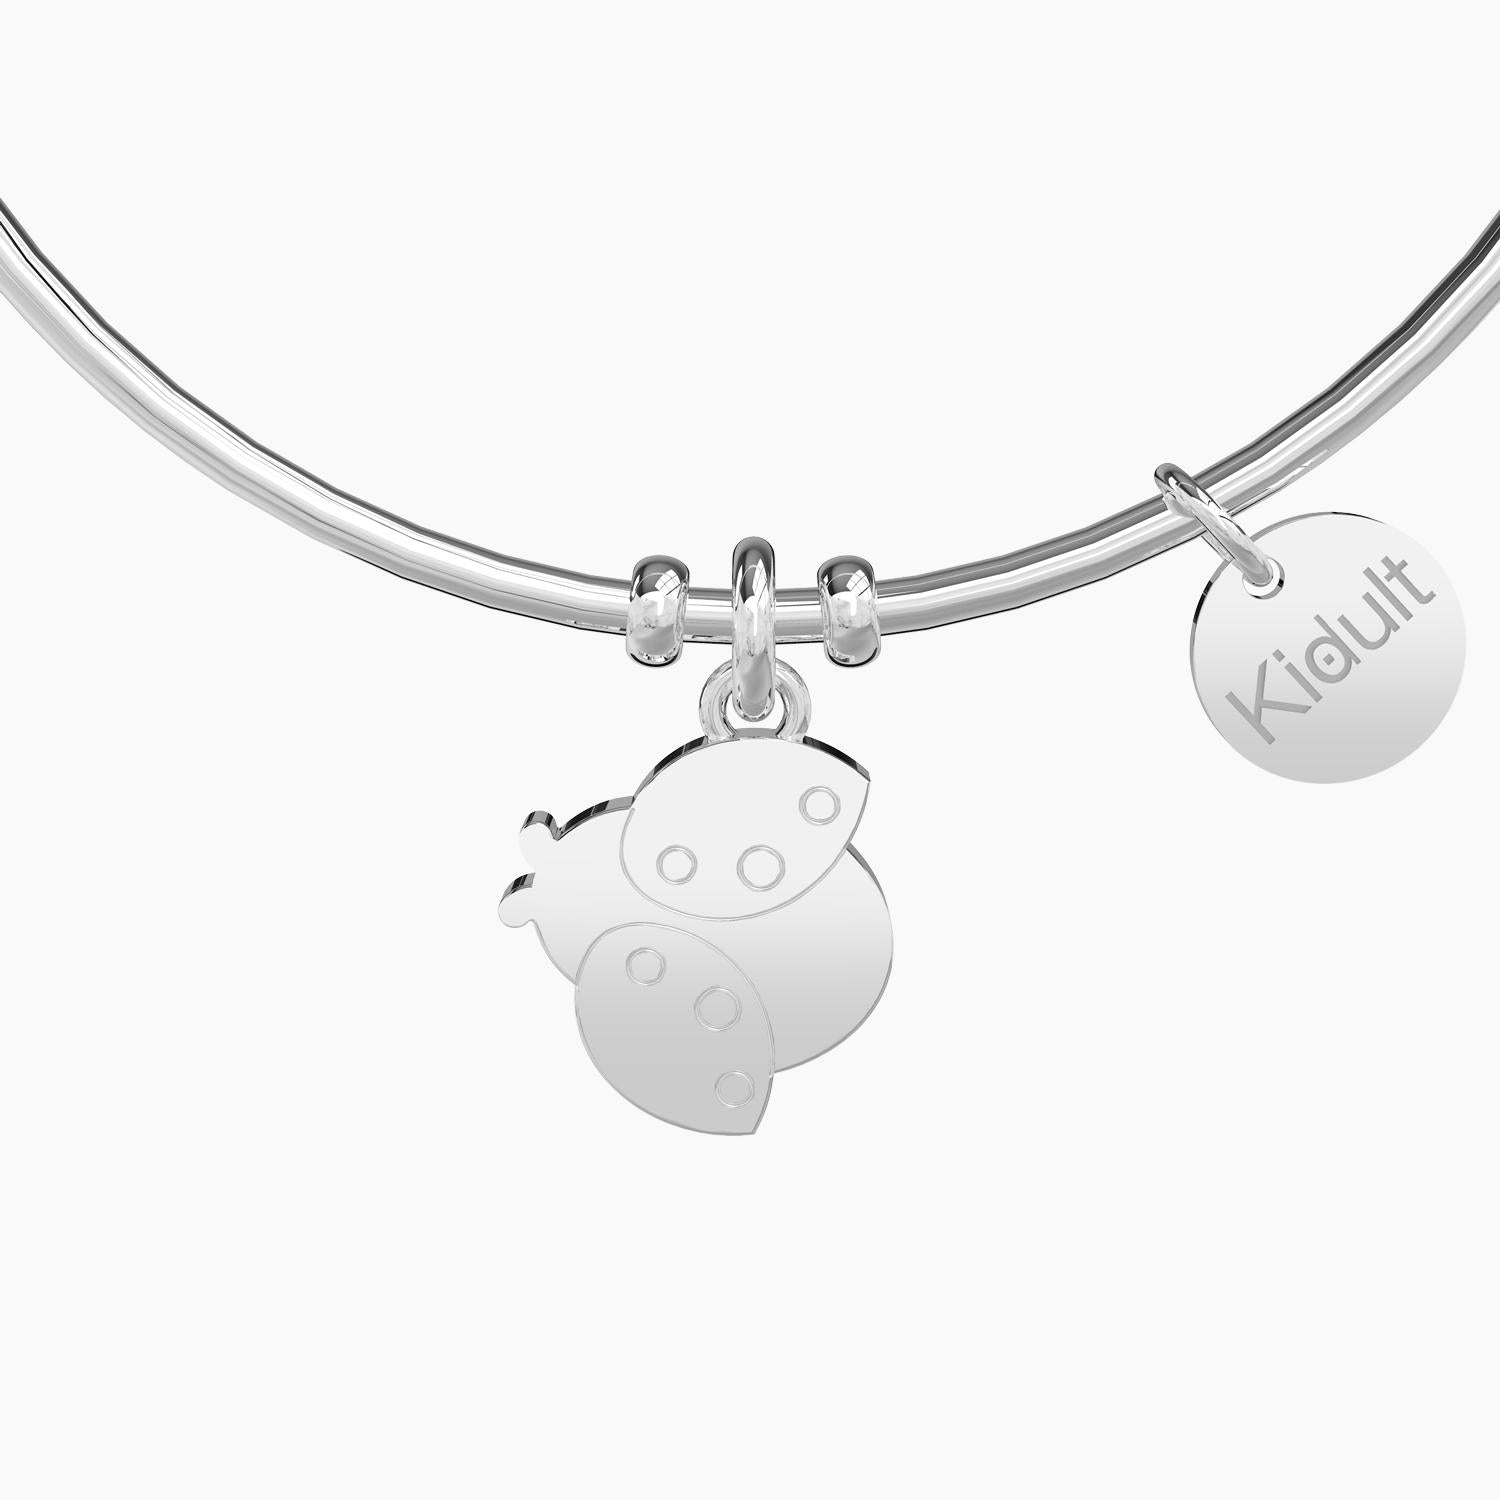 Women's bracelet Symbols collection - Ladybug | Luck - 231638